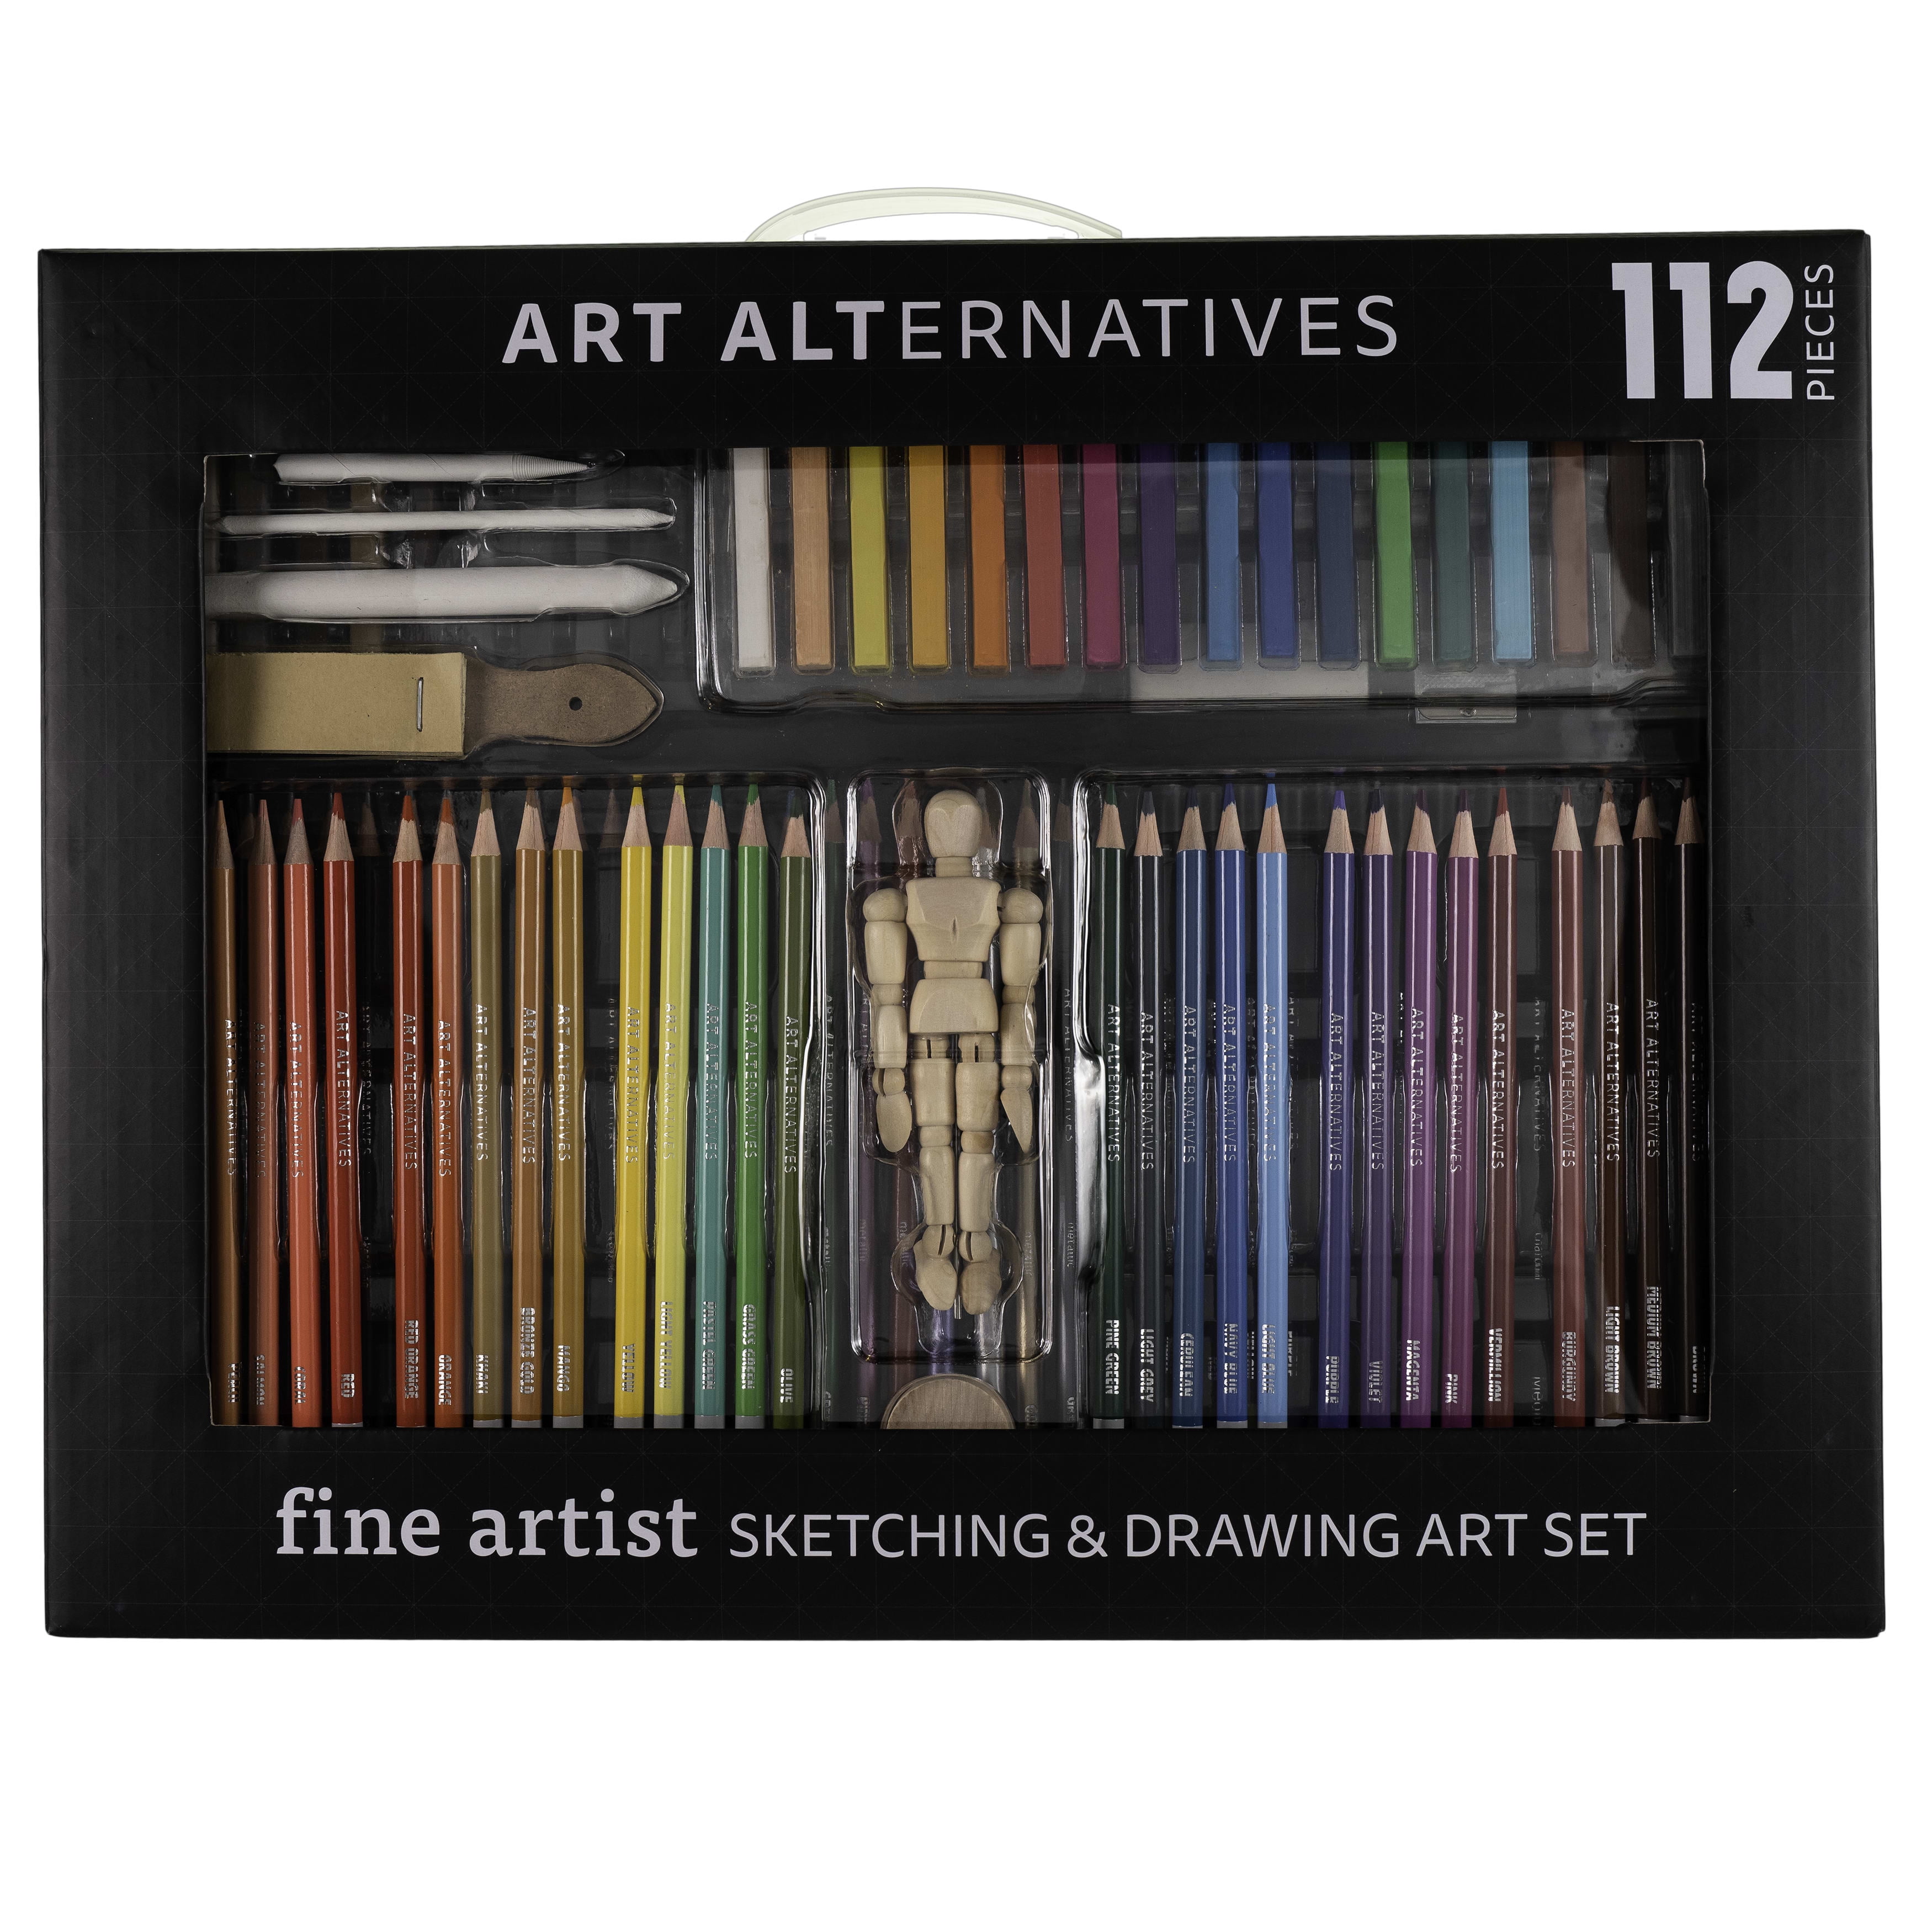  Art Alternatives Sketching & Drawing Art Kit 112